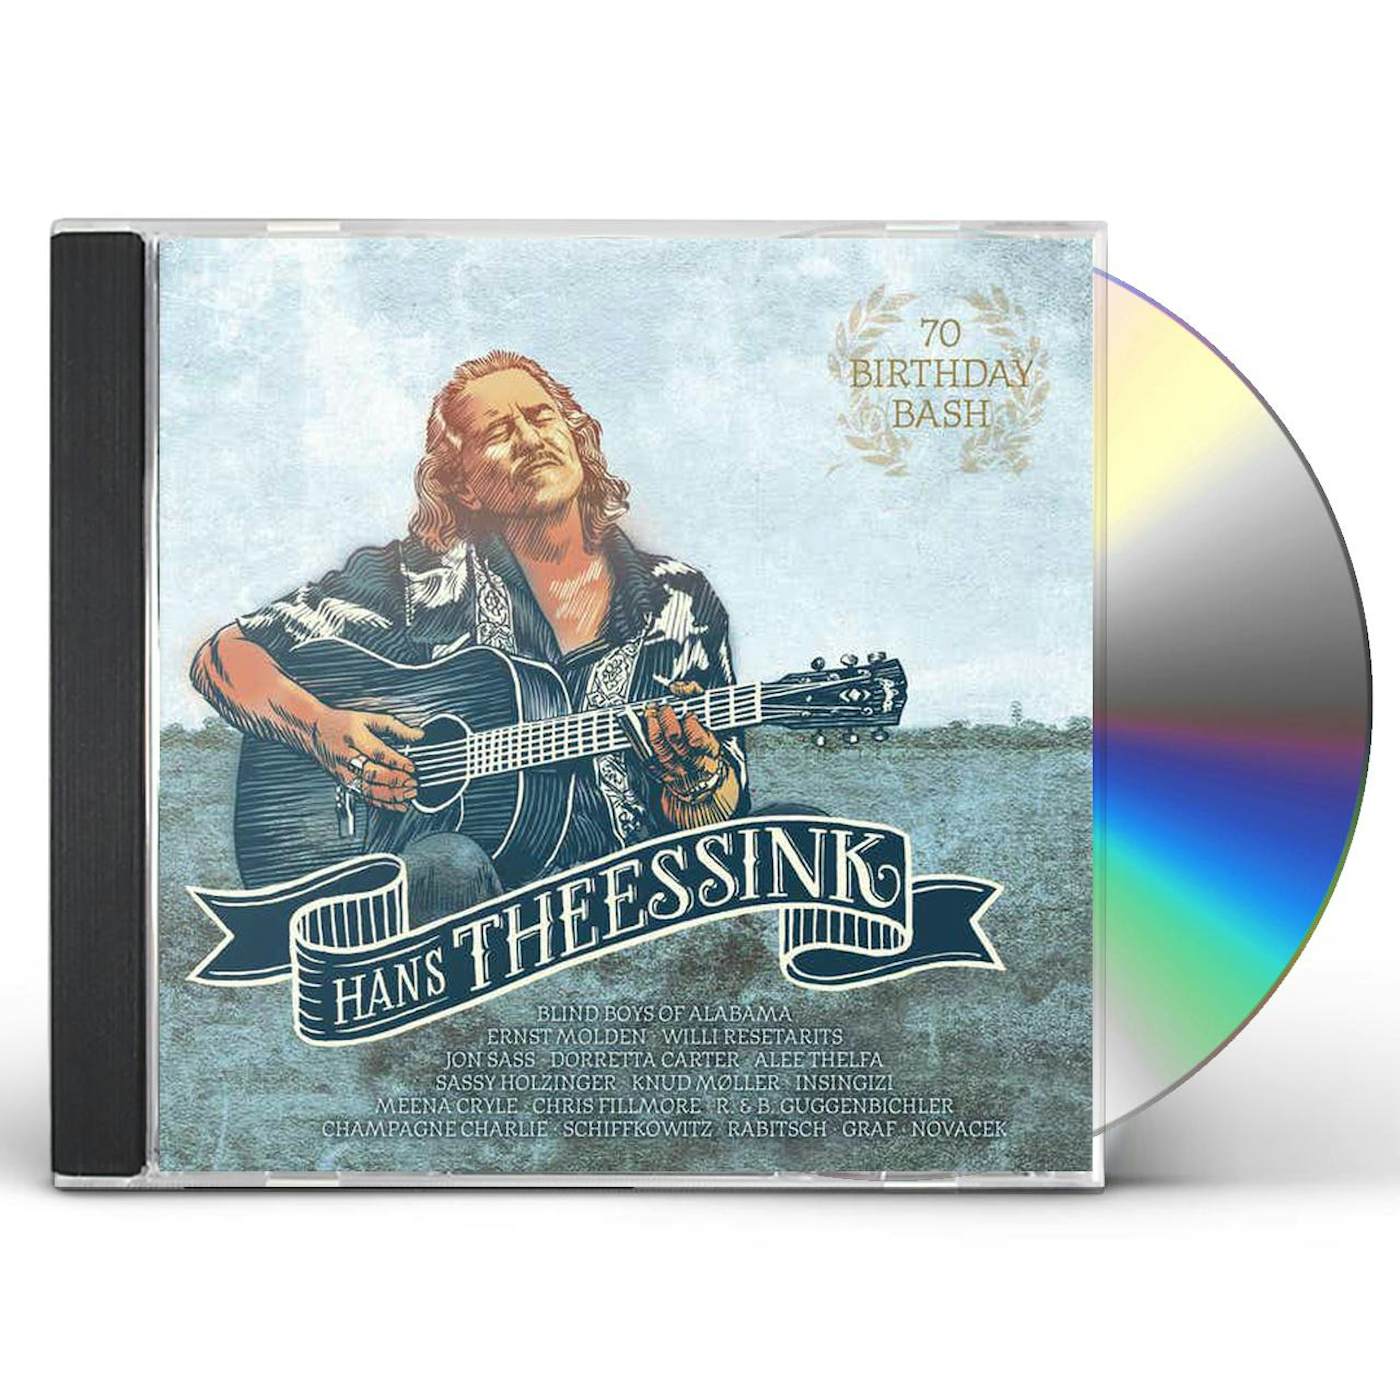 Hans Theessink 70 BIRTHDAY BASH CD